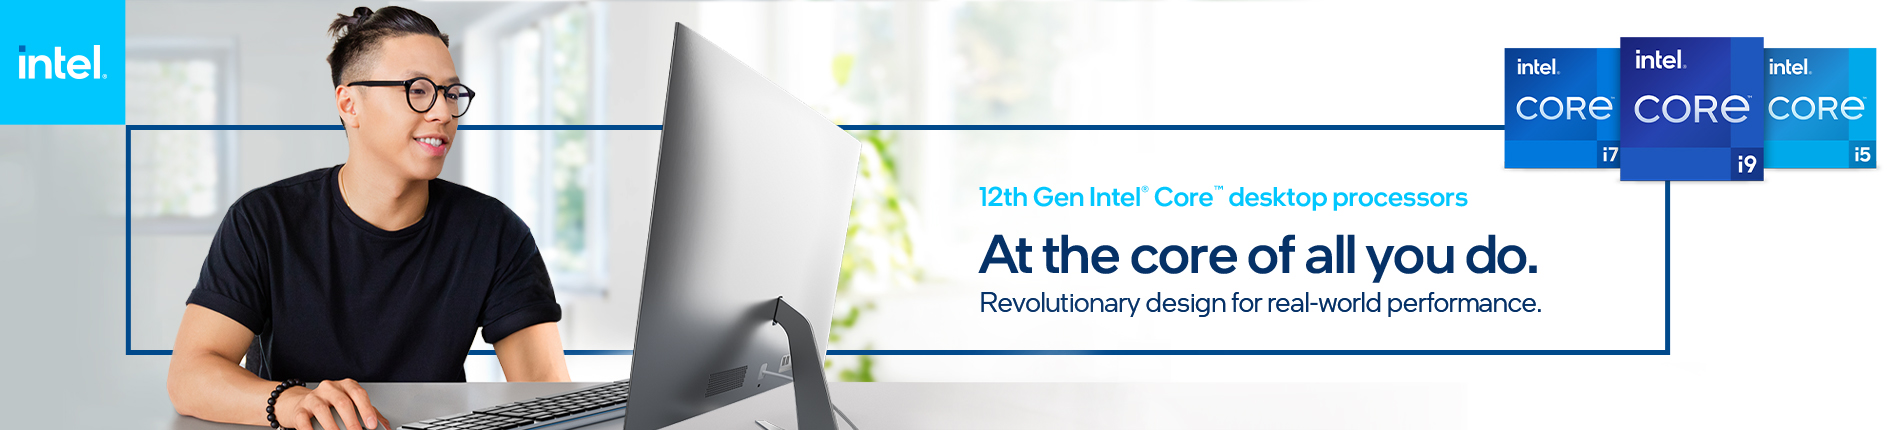 Intel 12thgen Consumer Launch 01.03.banner